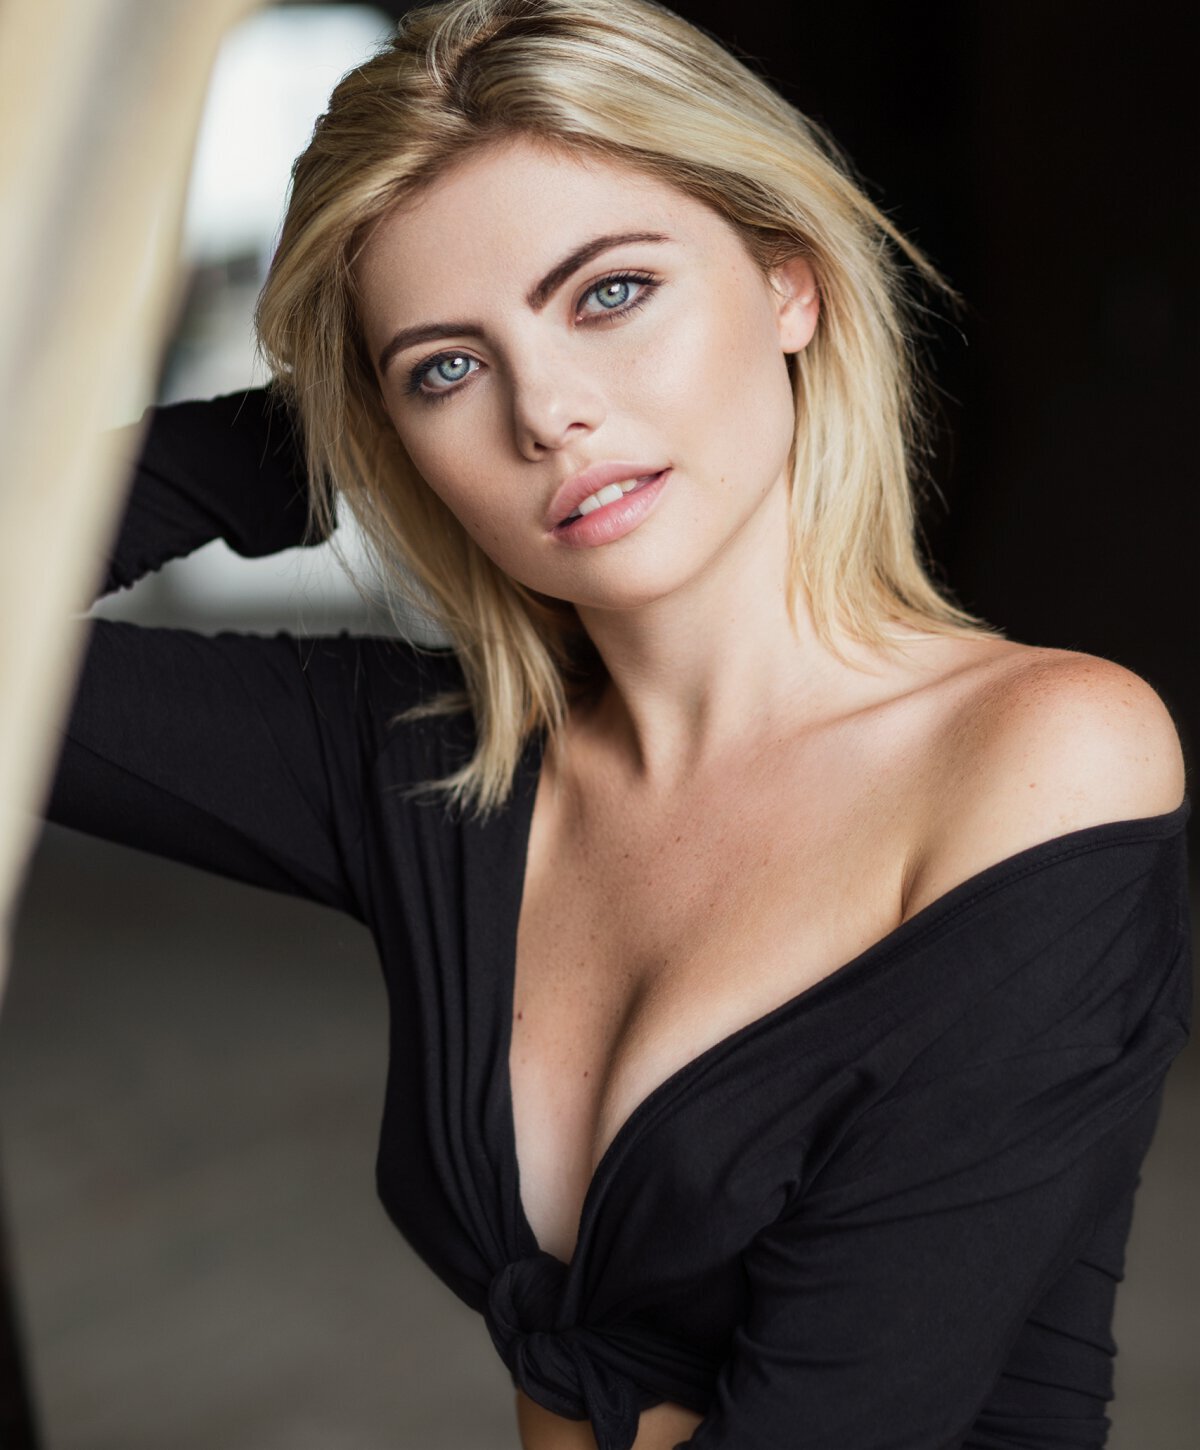 blonde Manchester Breast Augmentation patient model wearing a black shirt